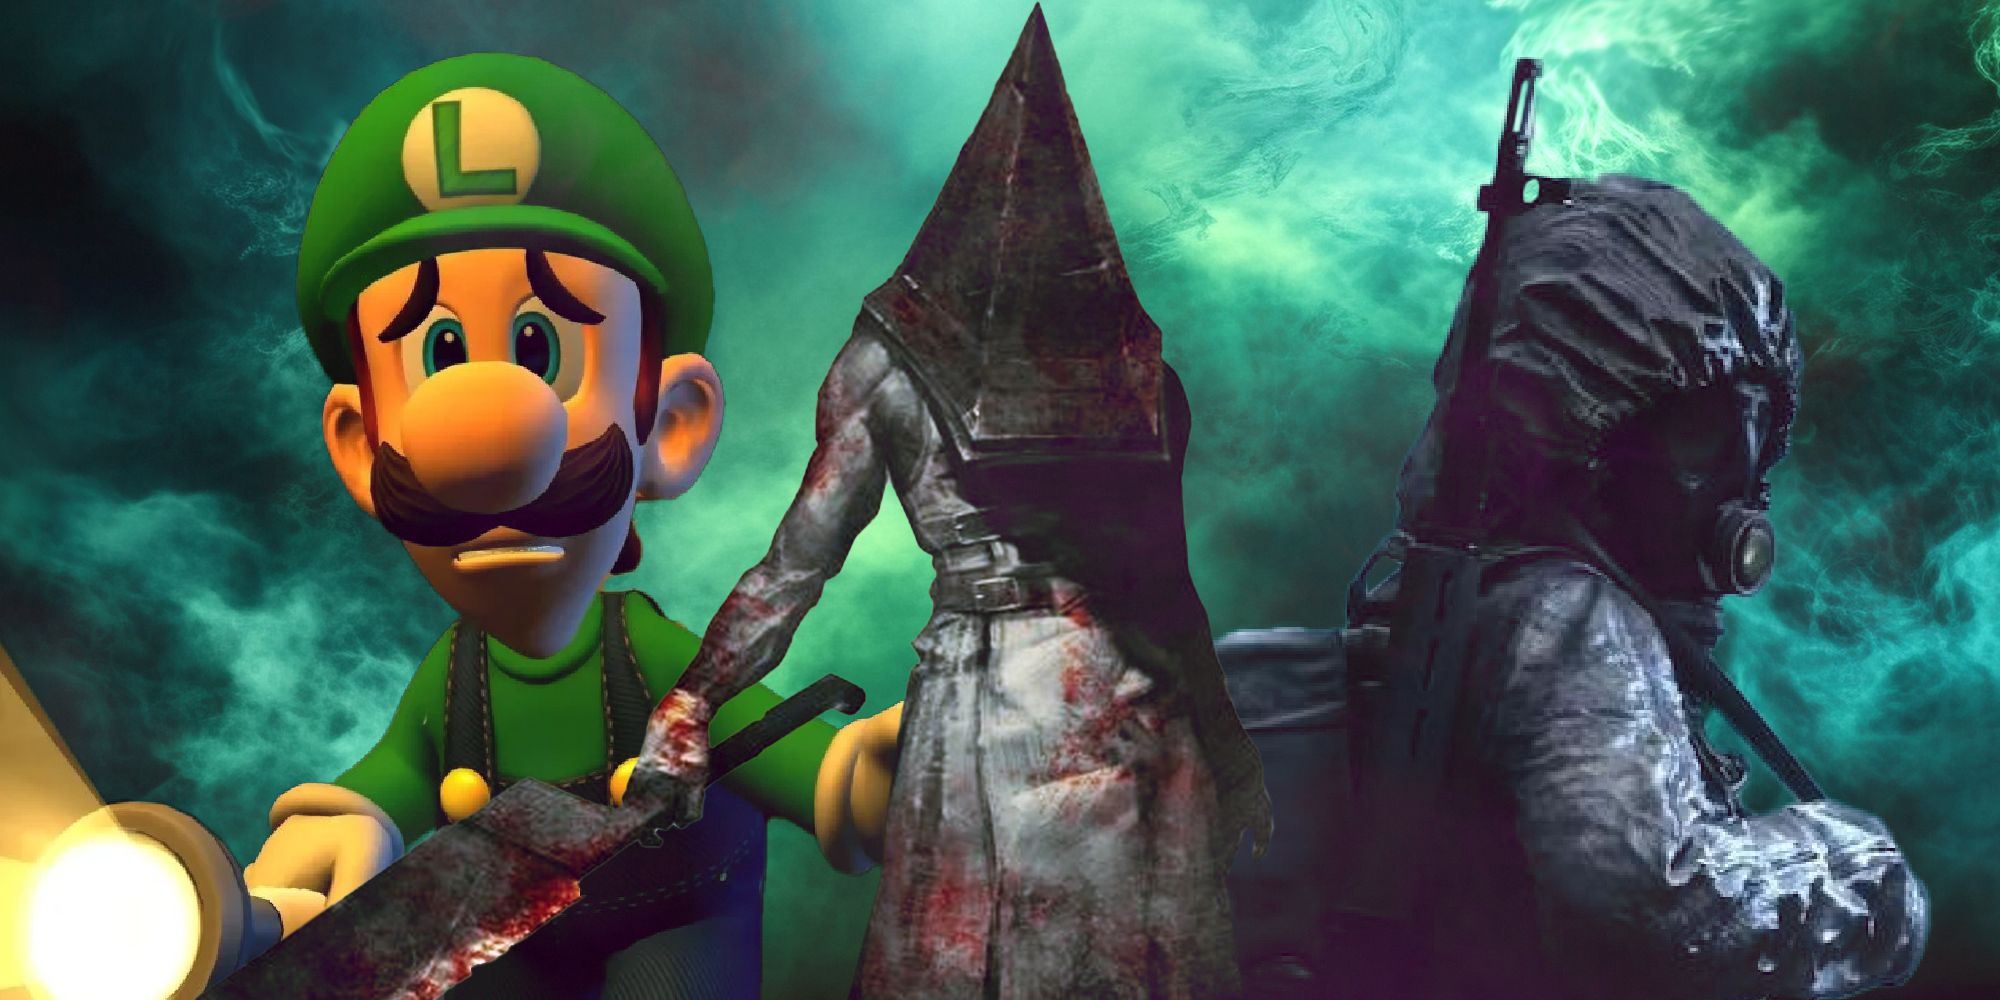 Luigi's Mansion, Silent Hill 2 Remake, and Stalker 2 over a green smoky background 